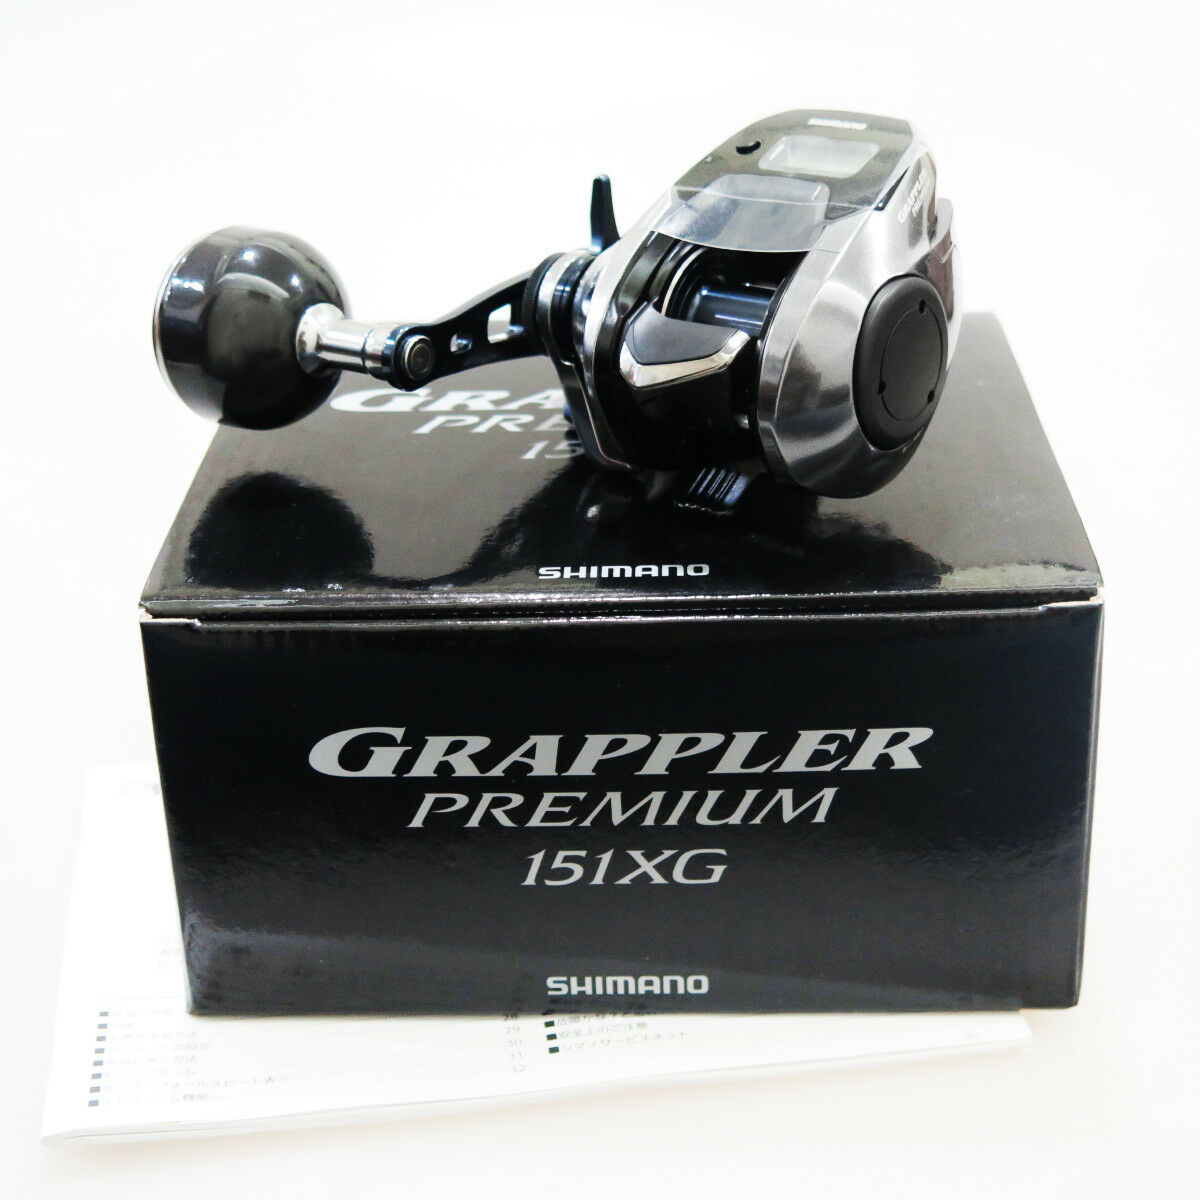 18 Shimano GRAPPLER 151XG Left For Sale - Fishing Flea Market